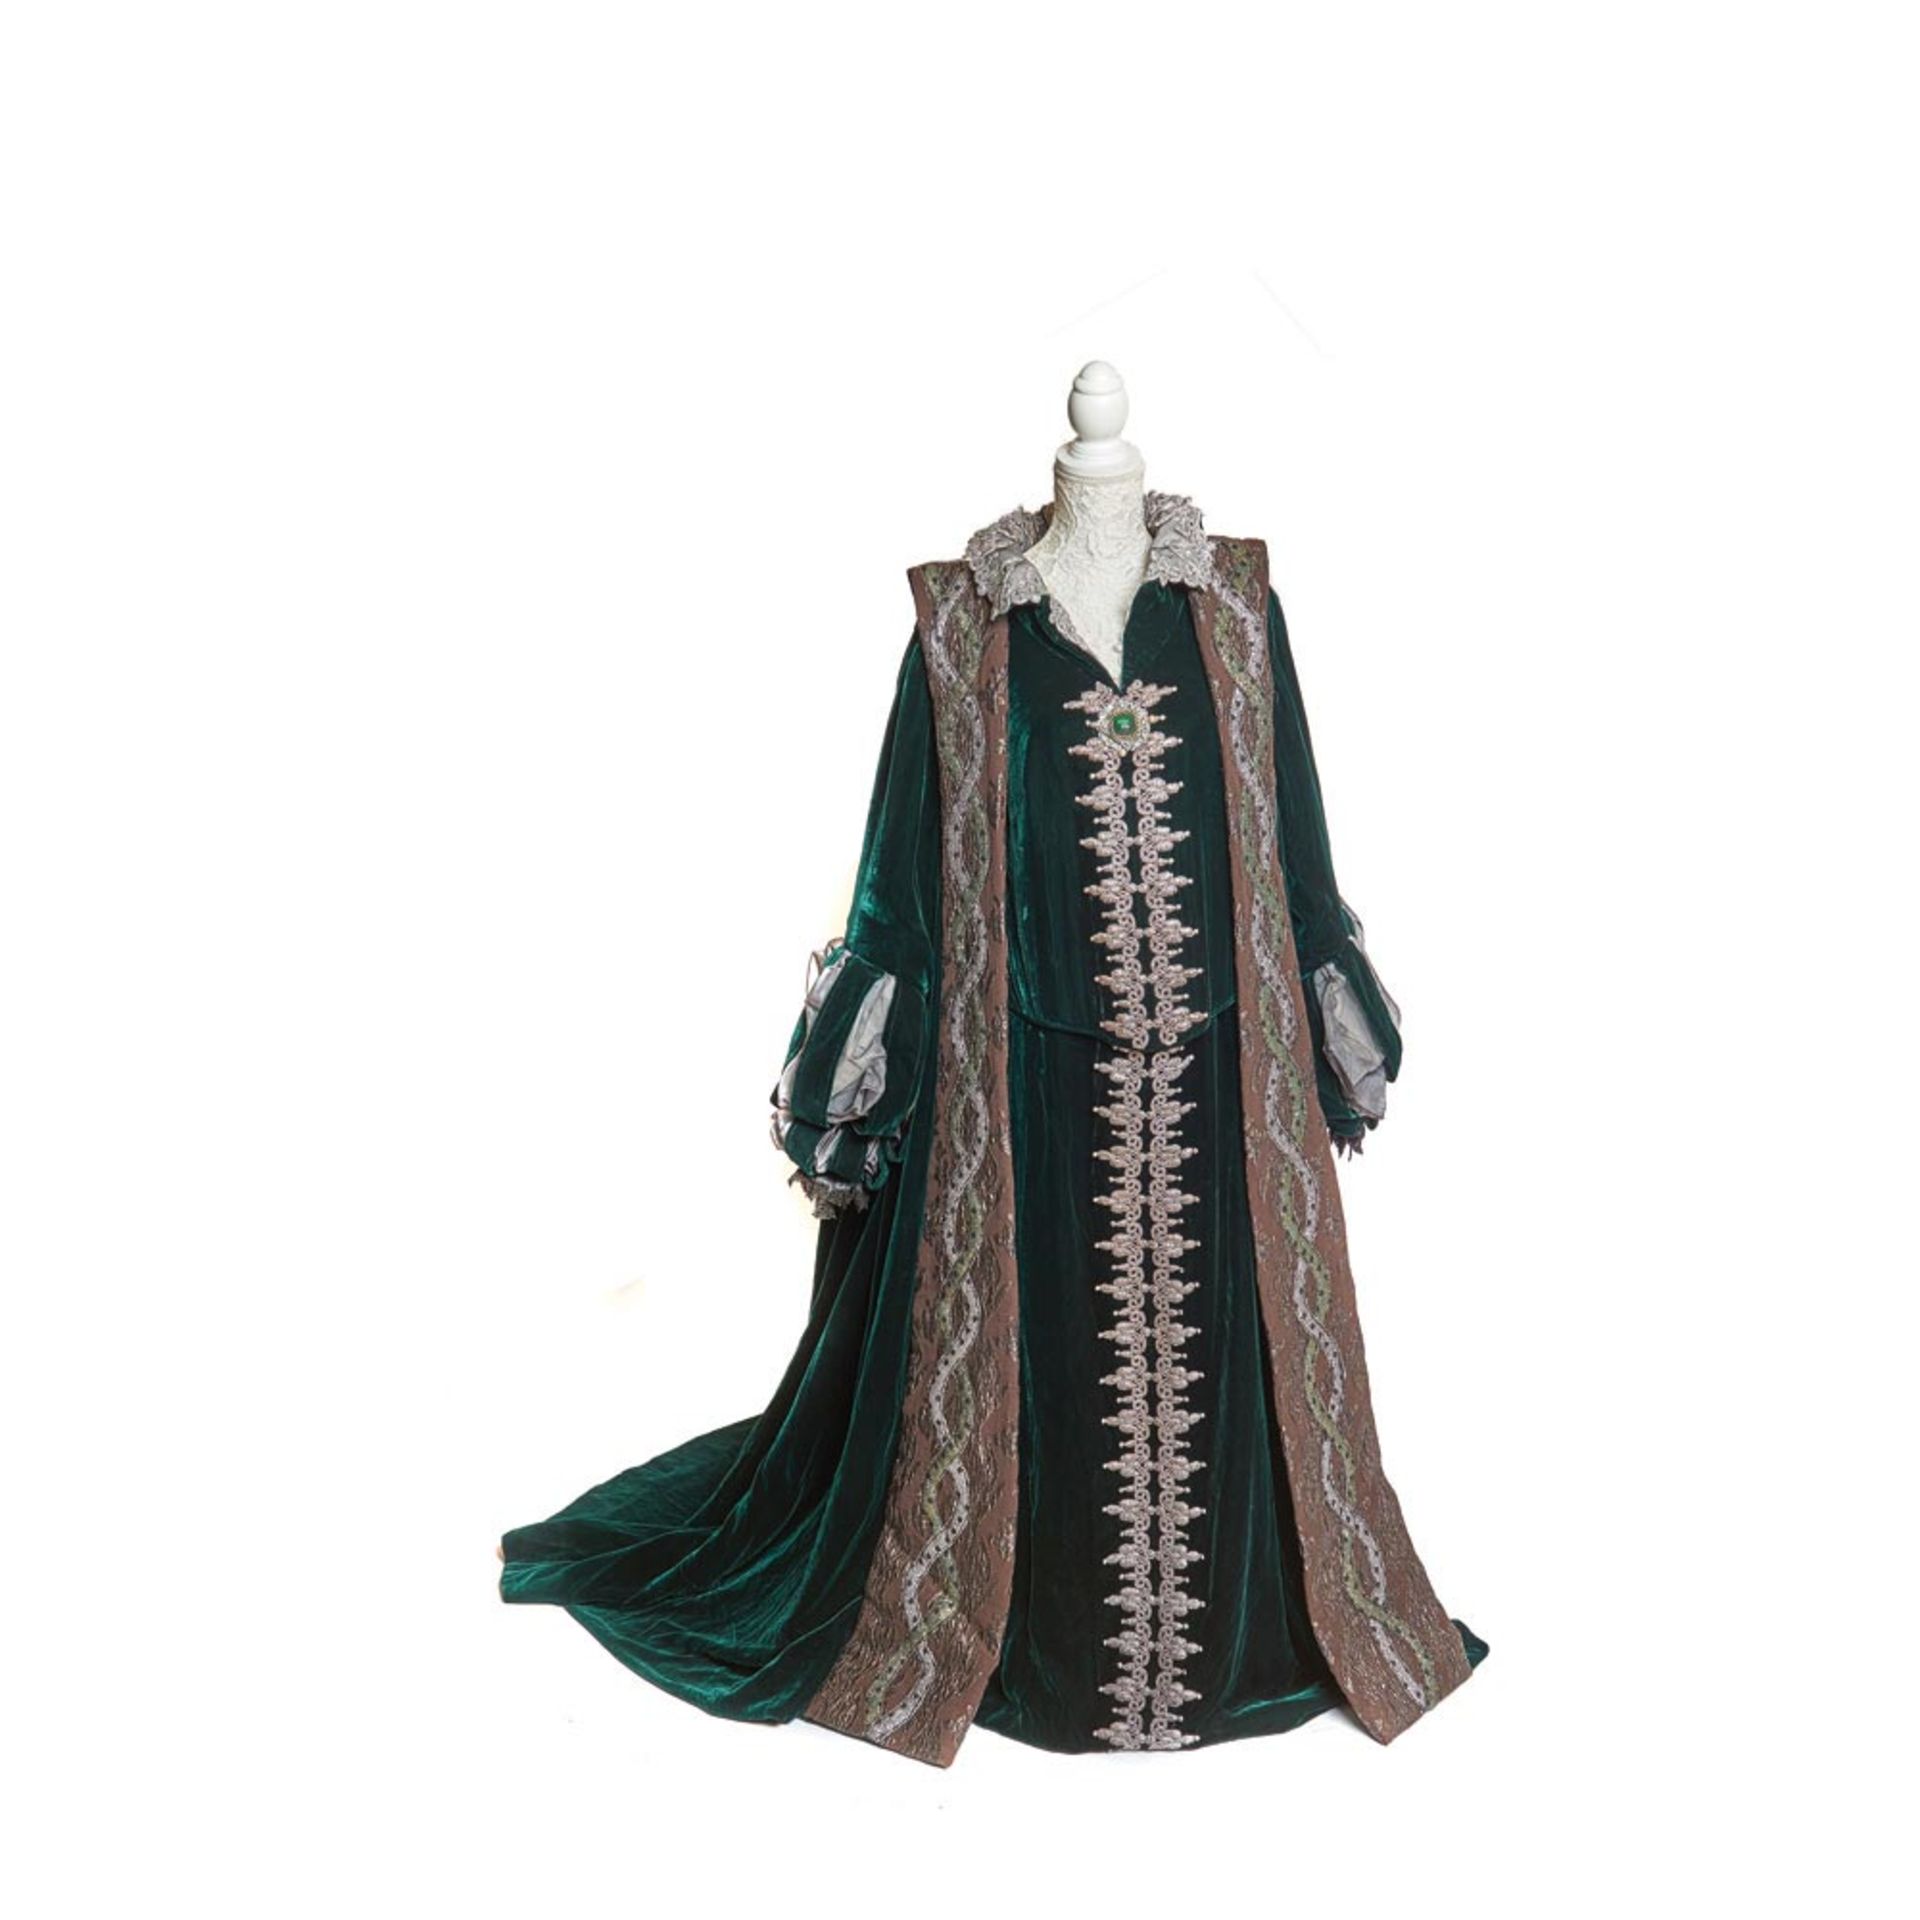 Dress of Montserrat Caballé for the Opera "Henry VIII", composer, Camille Saint-Saëns